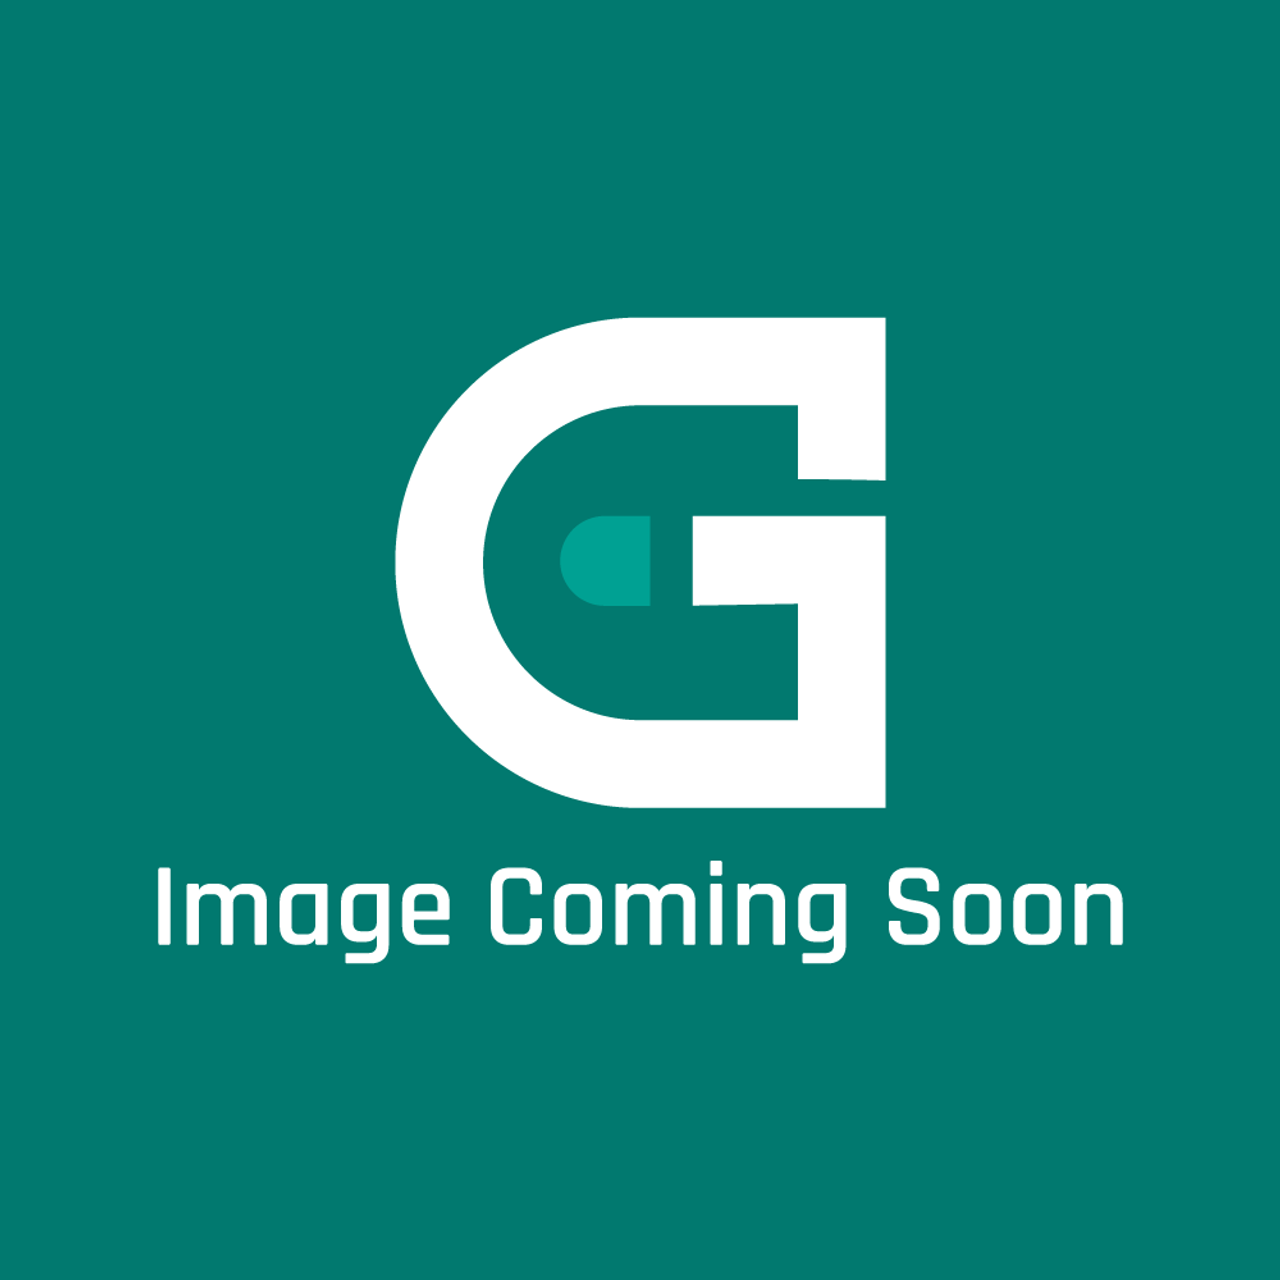 GE Appliances WR09X10174 - Damper - Image Coming Soon!